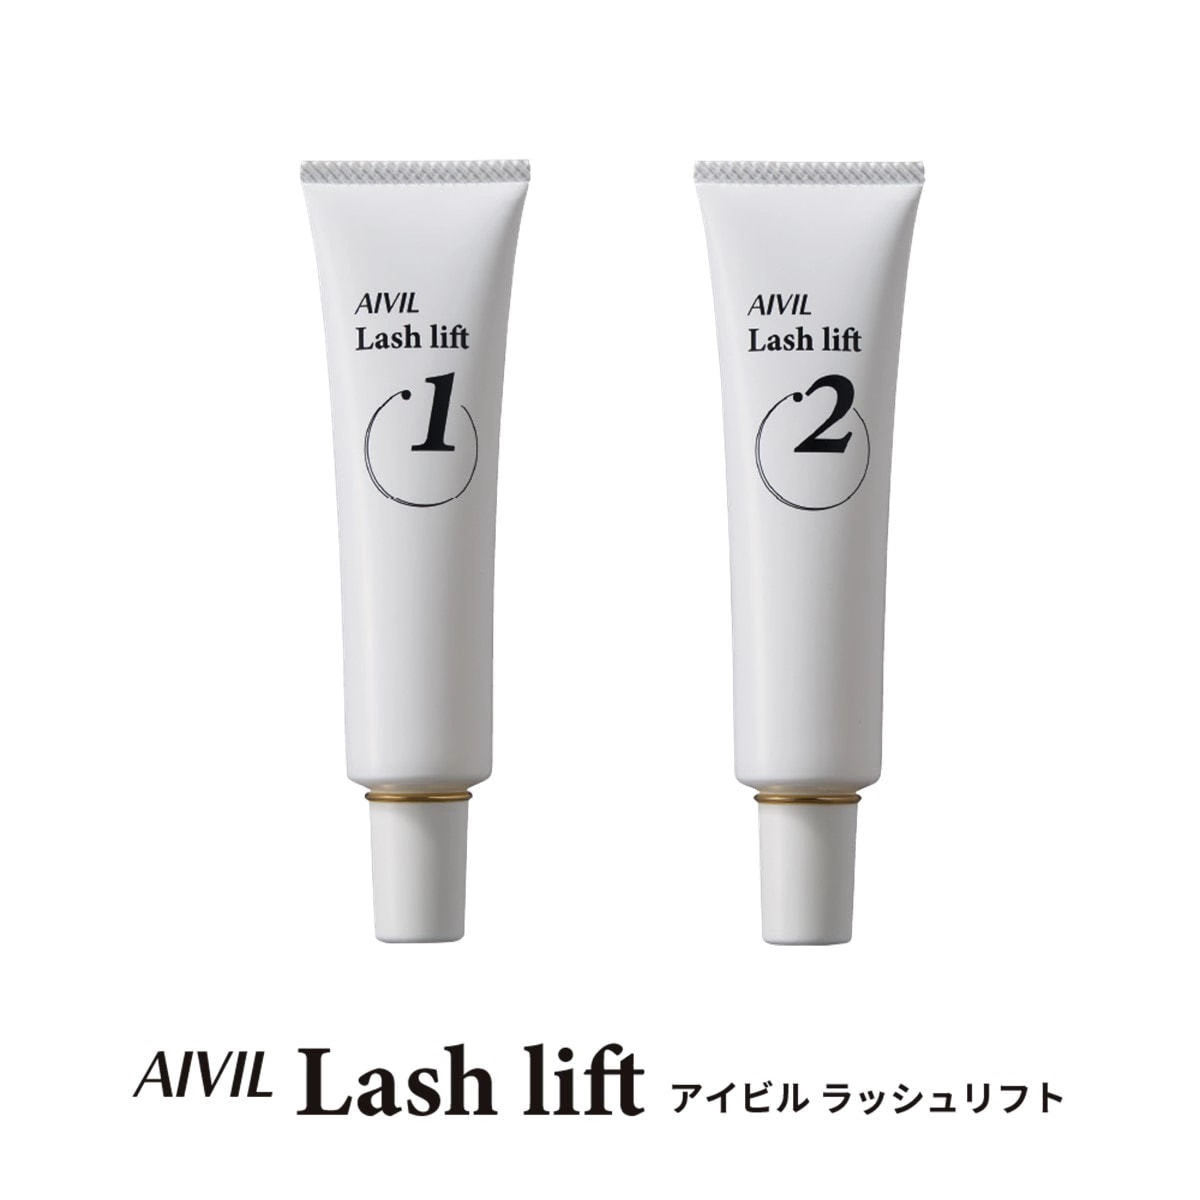 【AIVIL】ラッシュリフトセット